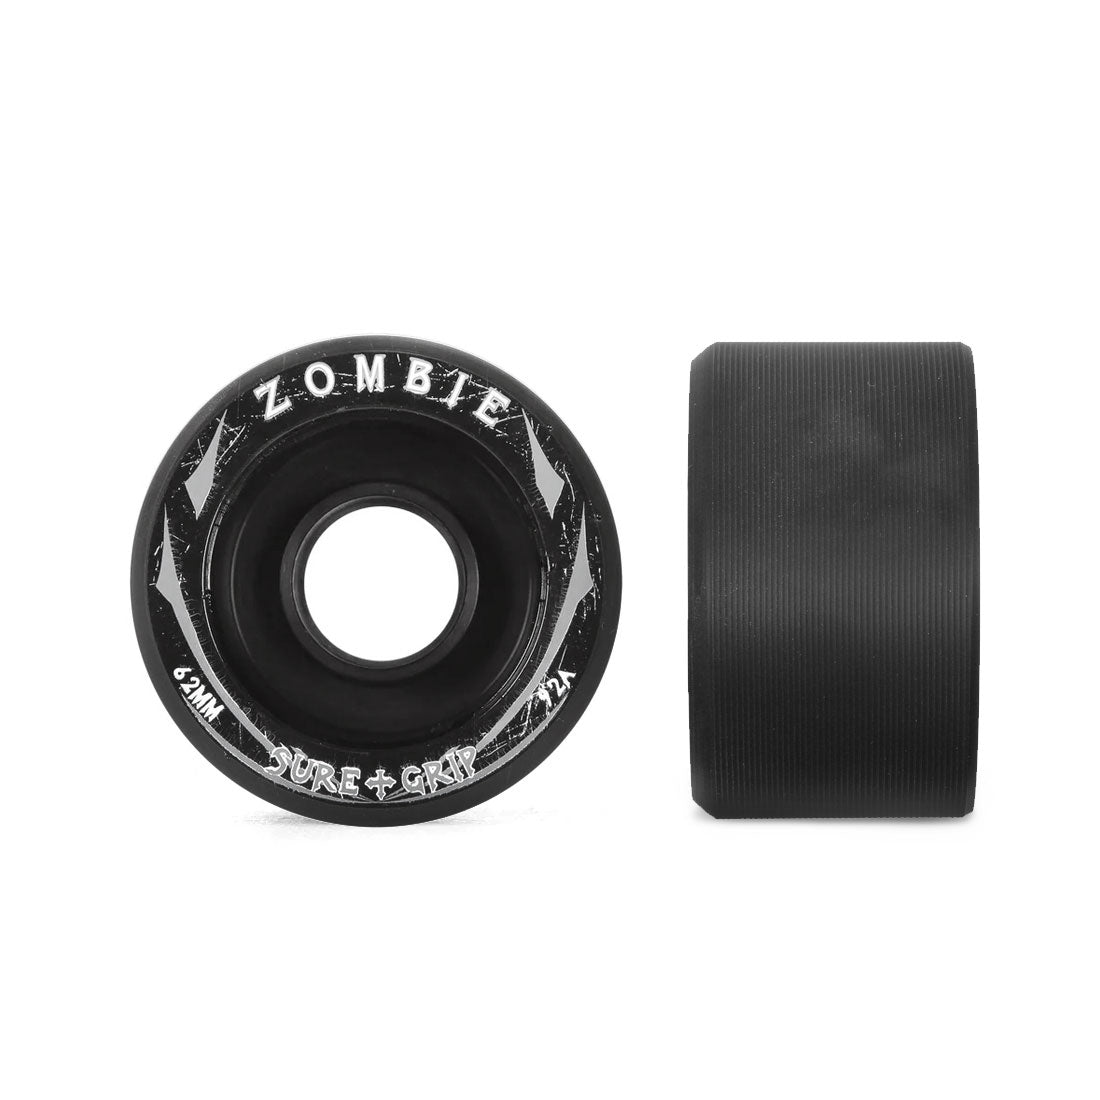 Sure-Grip Zombie Mid 62x38mm 4pk Black 92A Roller Skate Wheels